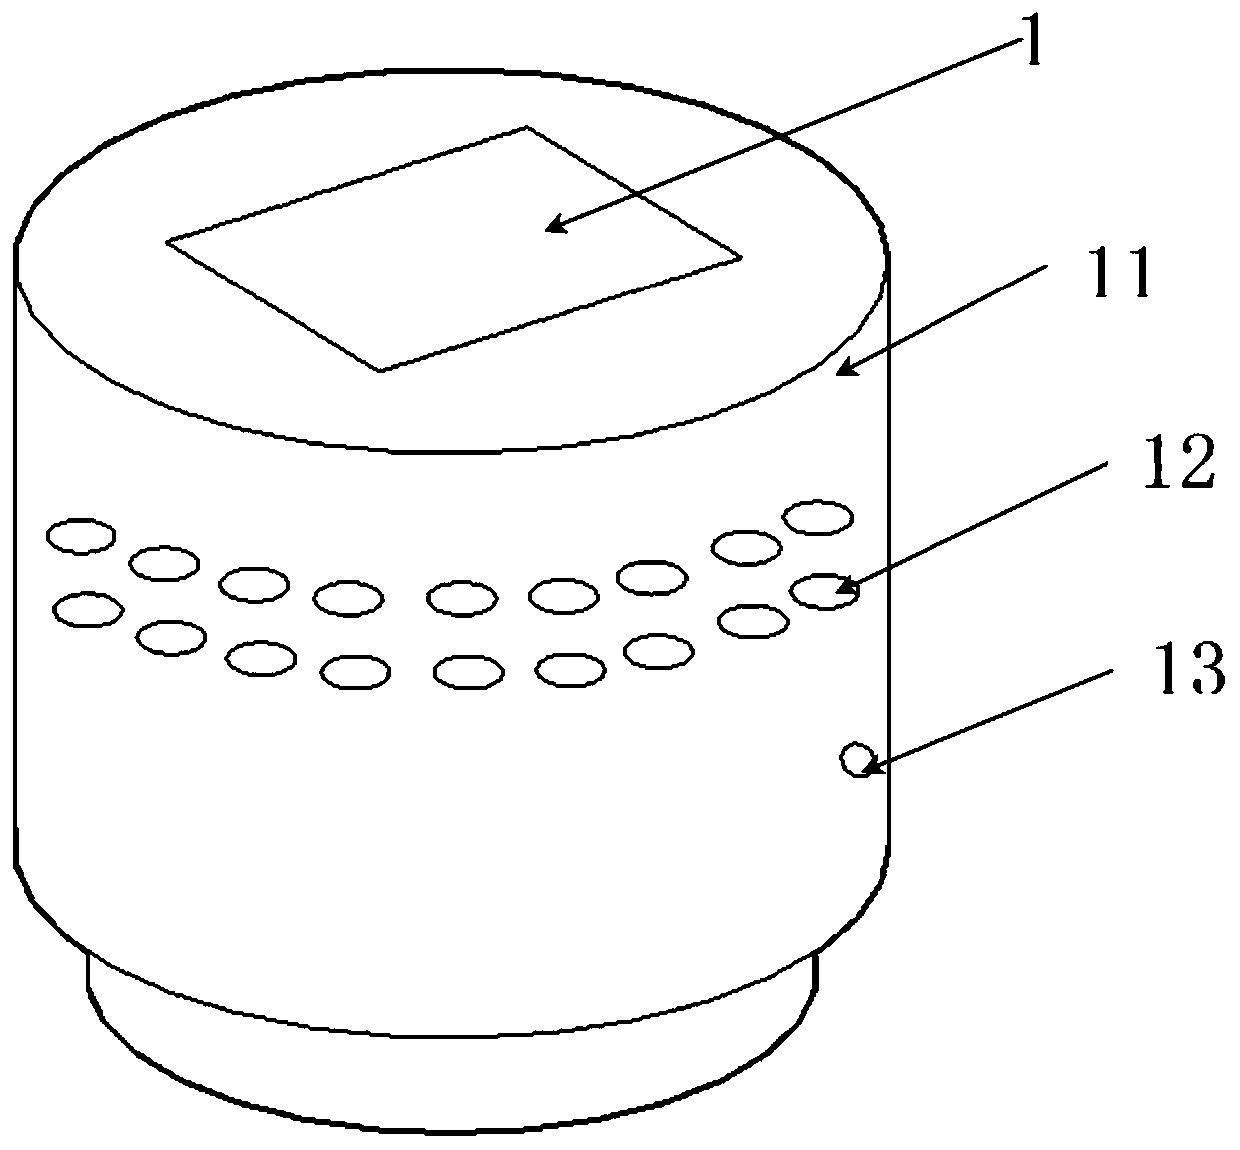 Shuttlecock humidor based on semiconductor humidification